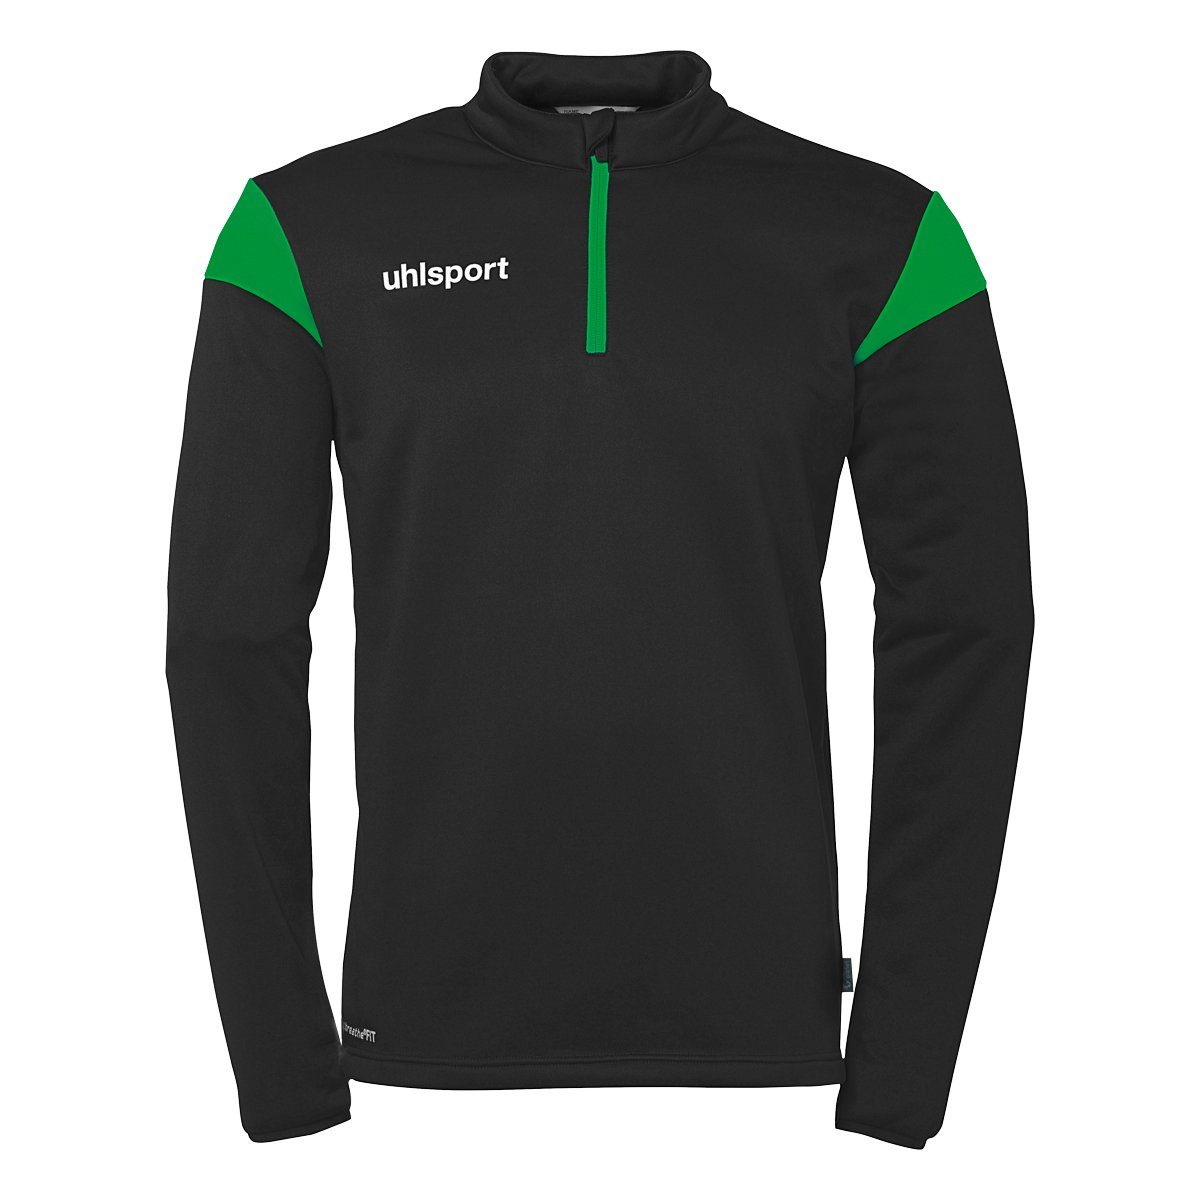 uhlsport Sweatshirt Squad 27 1/4 Zip Top schwarz/fluo grün